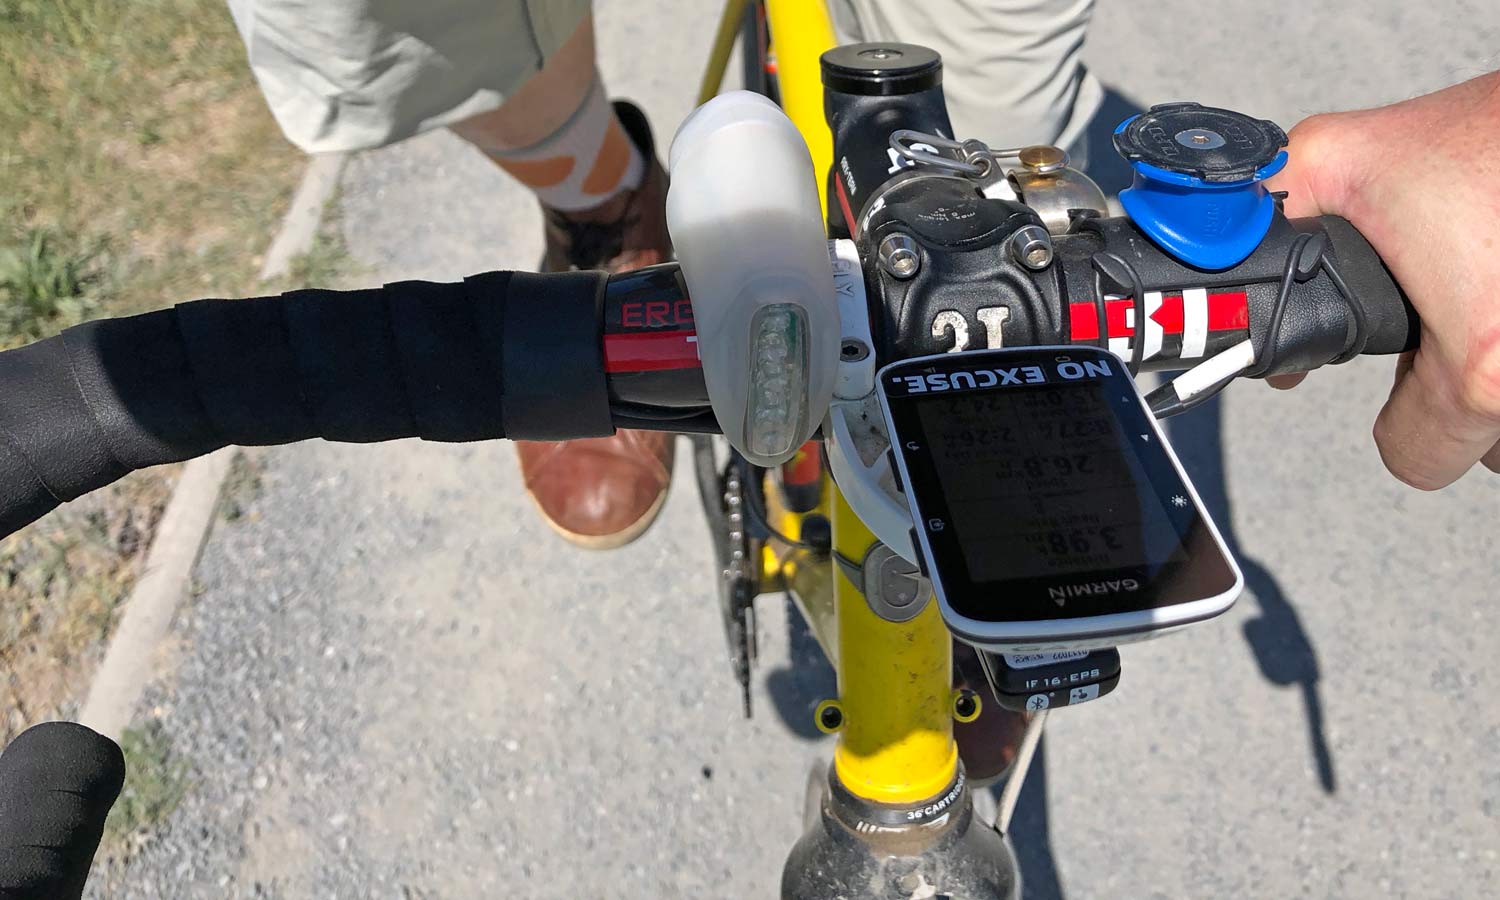 Quad Lock iPhone X case & Bike Mount kit on the bike